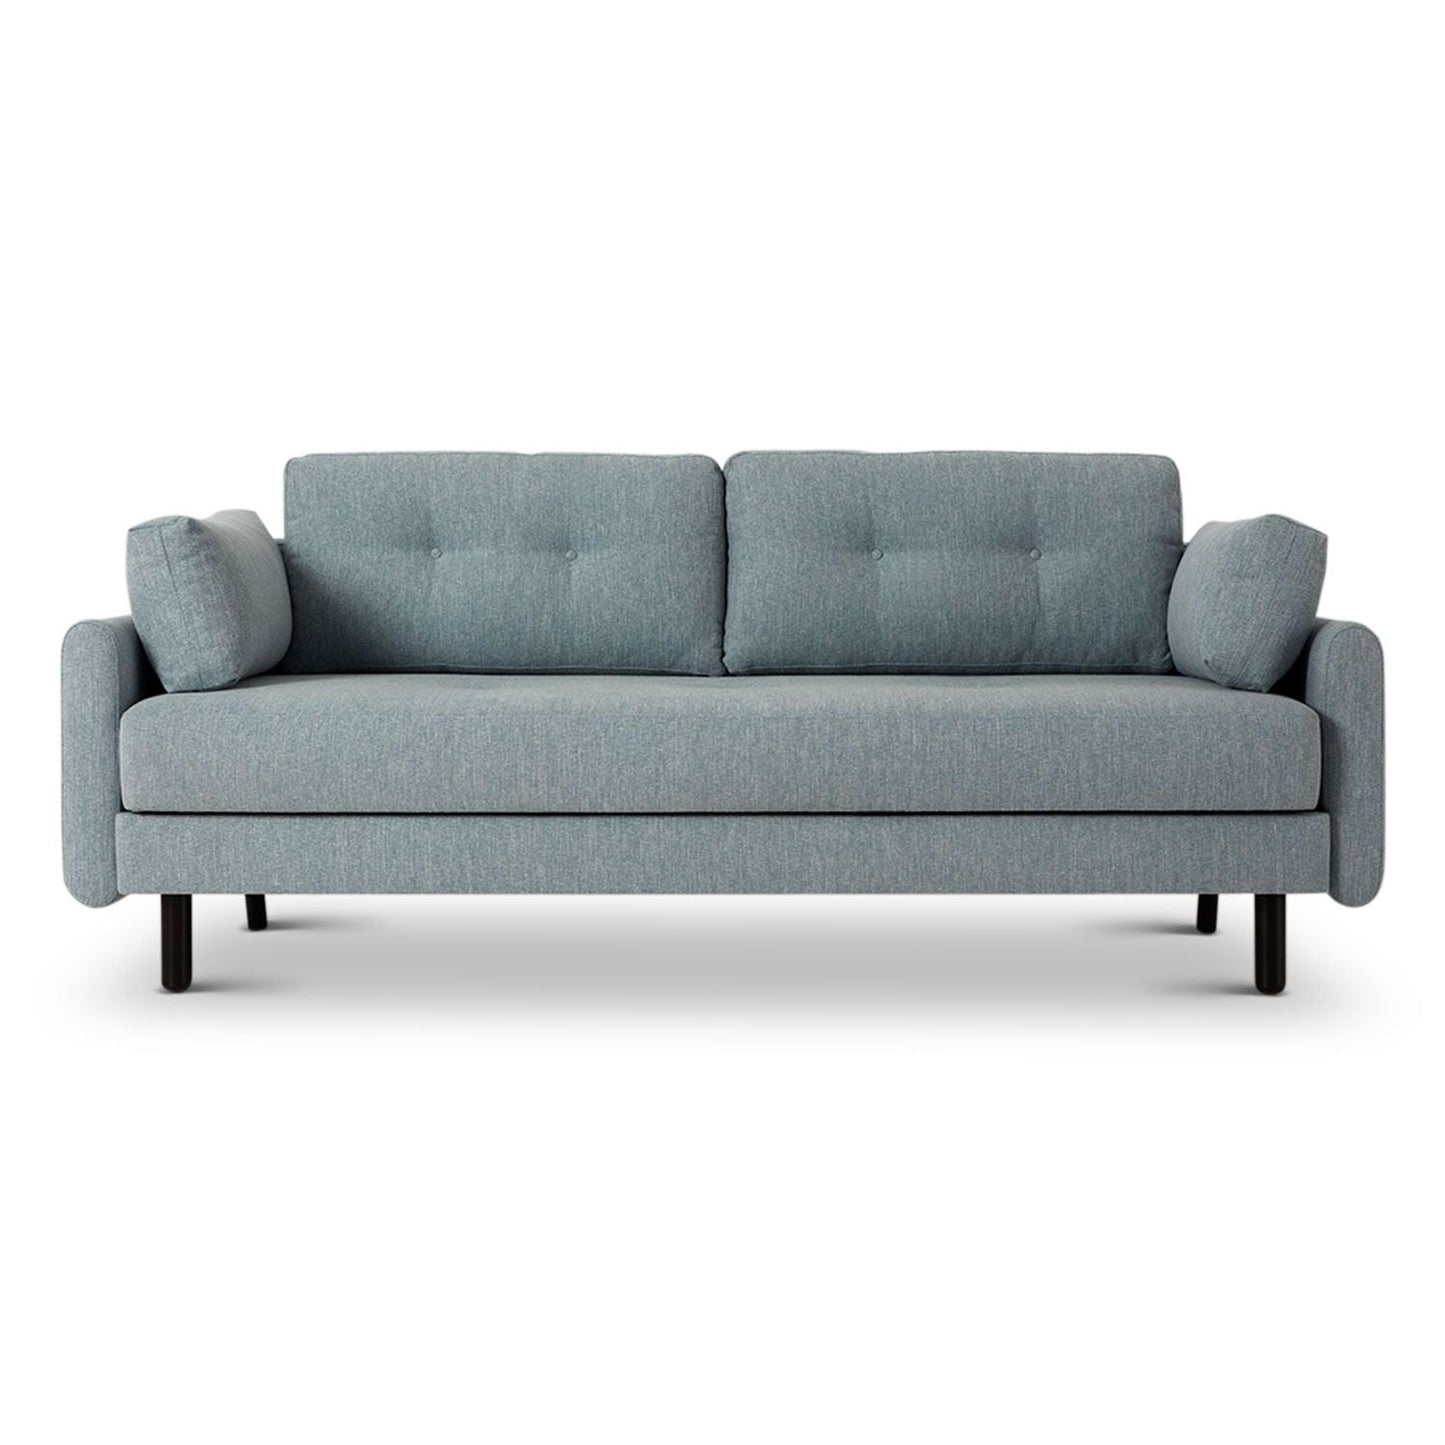 Model 04 Linen 3 Seat Sofa Bed Swyft Homebound